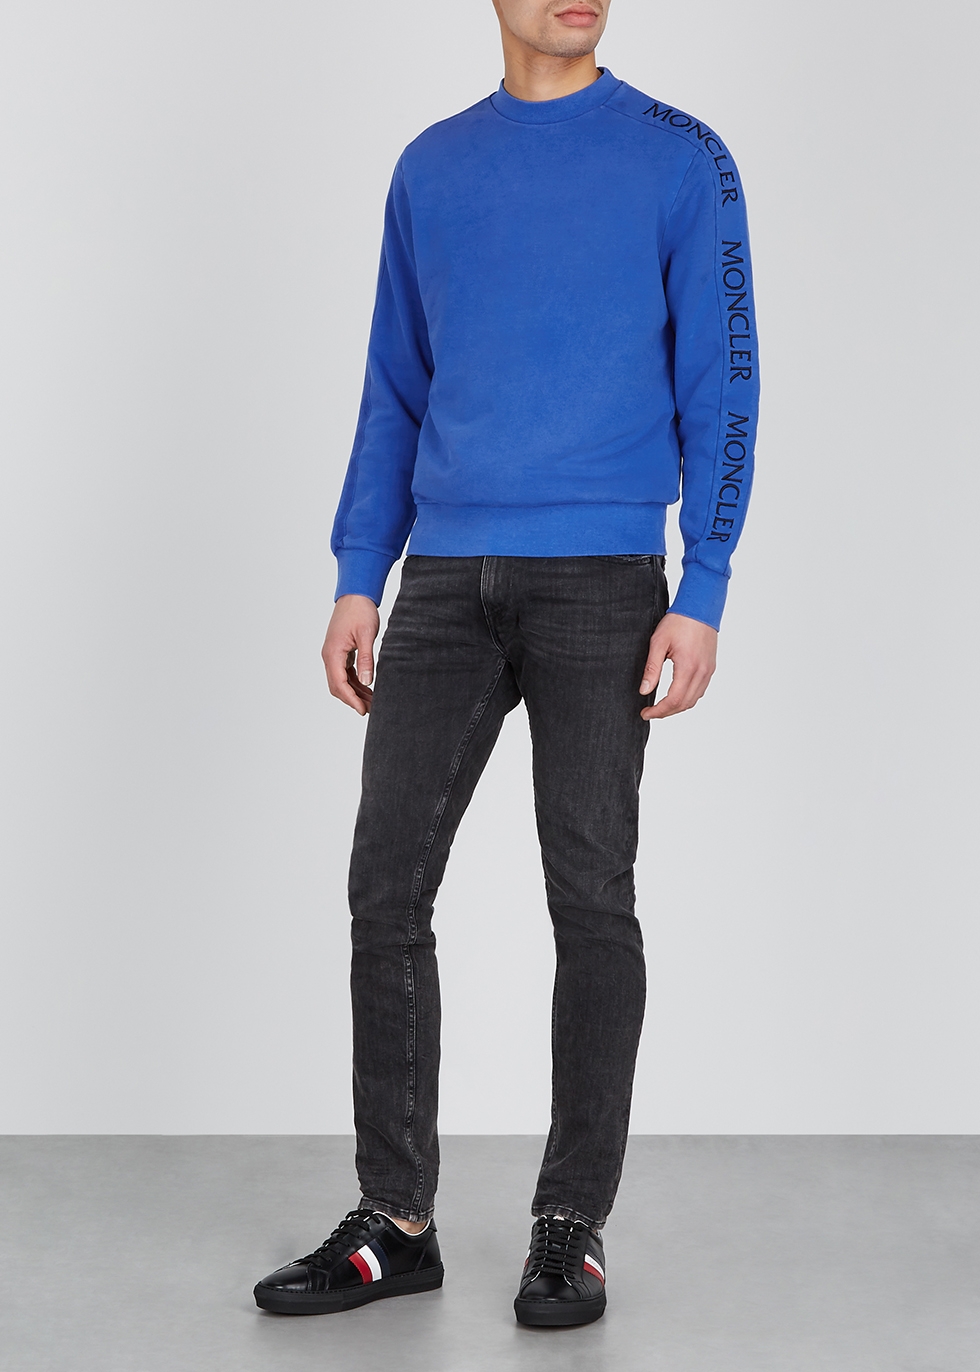 moncler blue sweatshirt